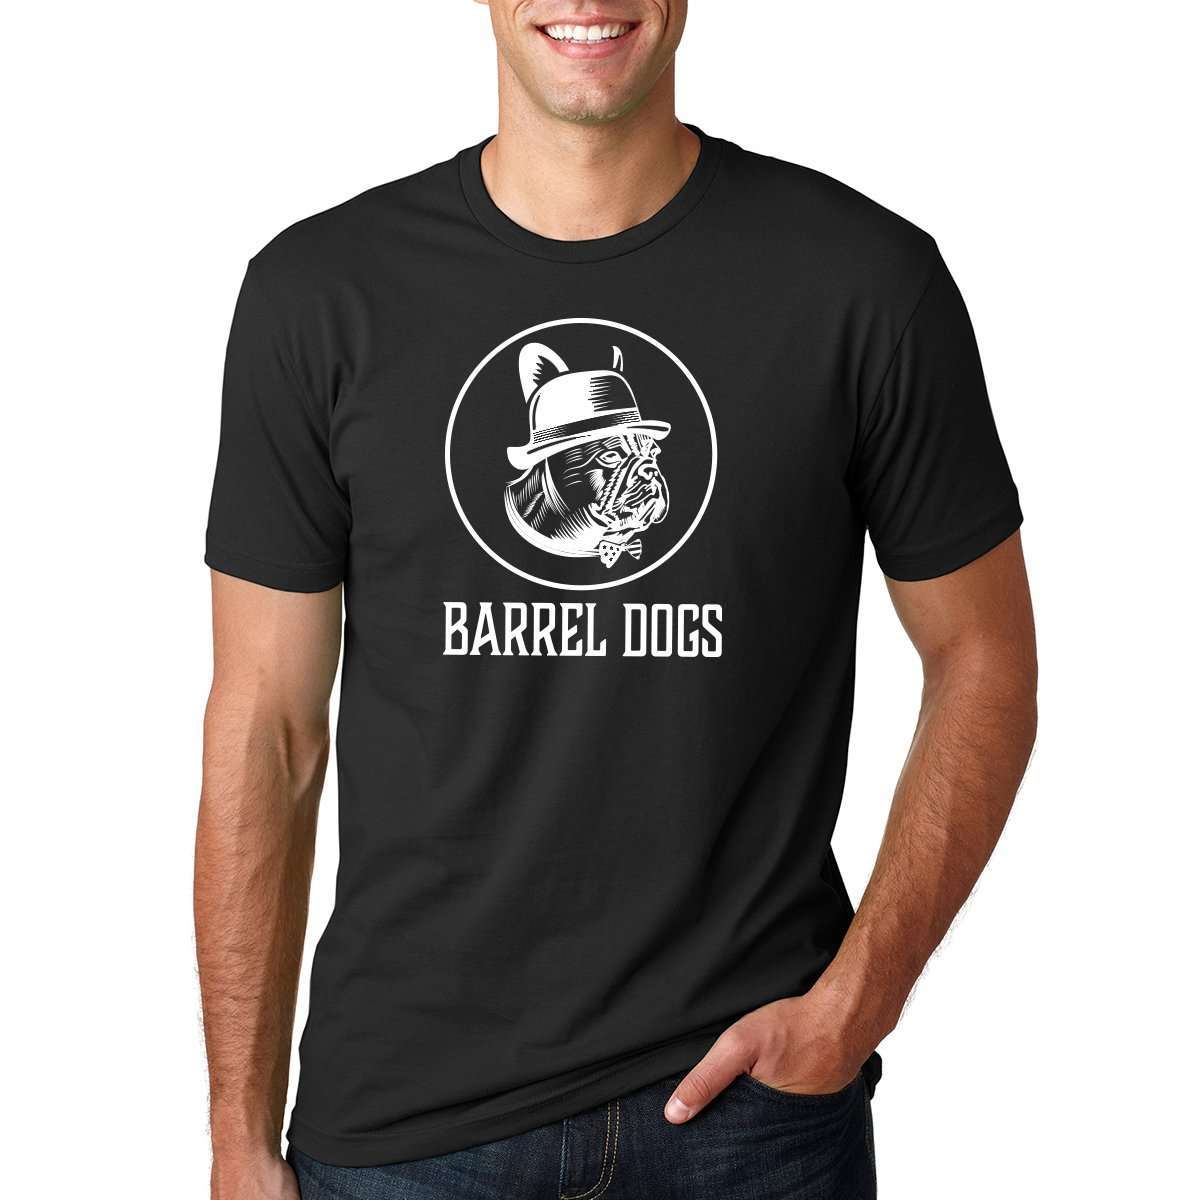 Barrel Dogs Logo Men's Tee - Barrel Dogs